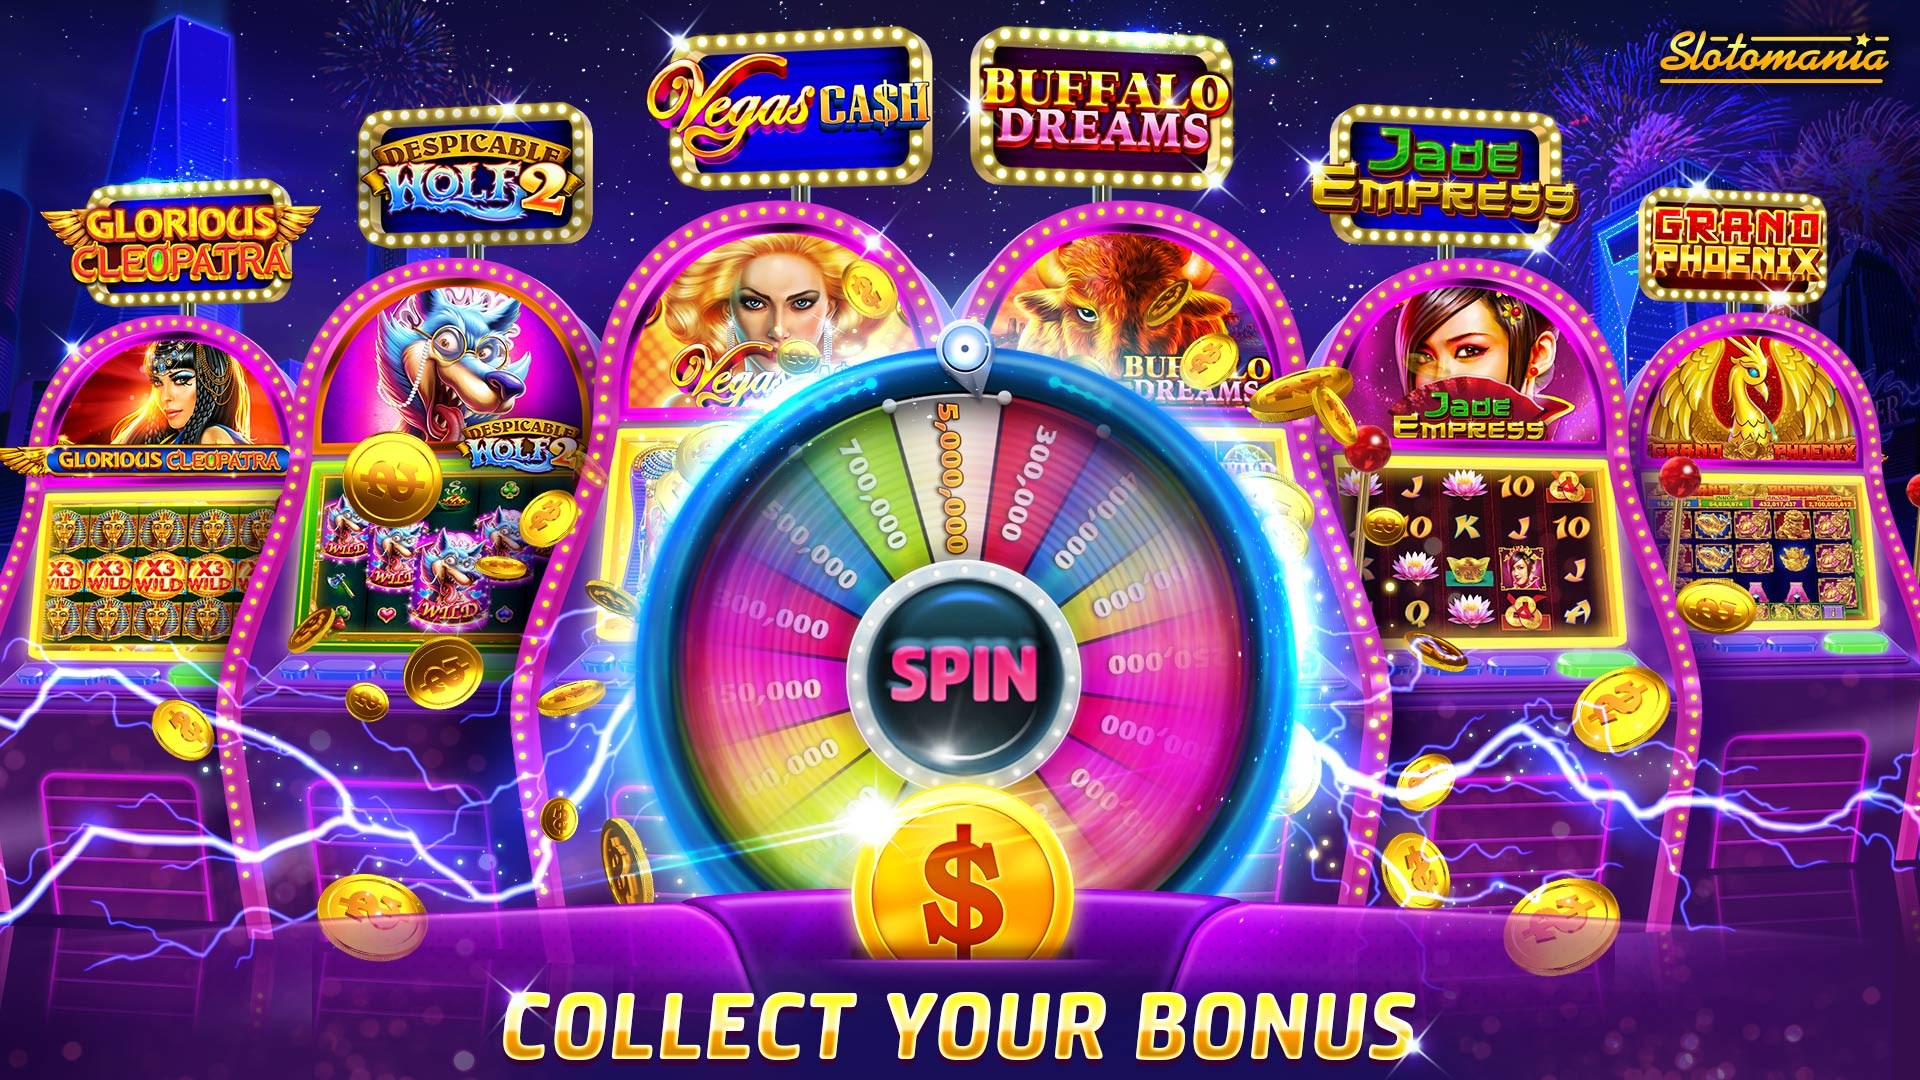 Epic Jackpot Free Slots Games Slot Machine Casino. -